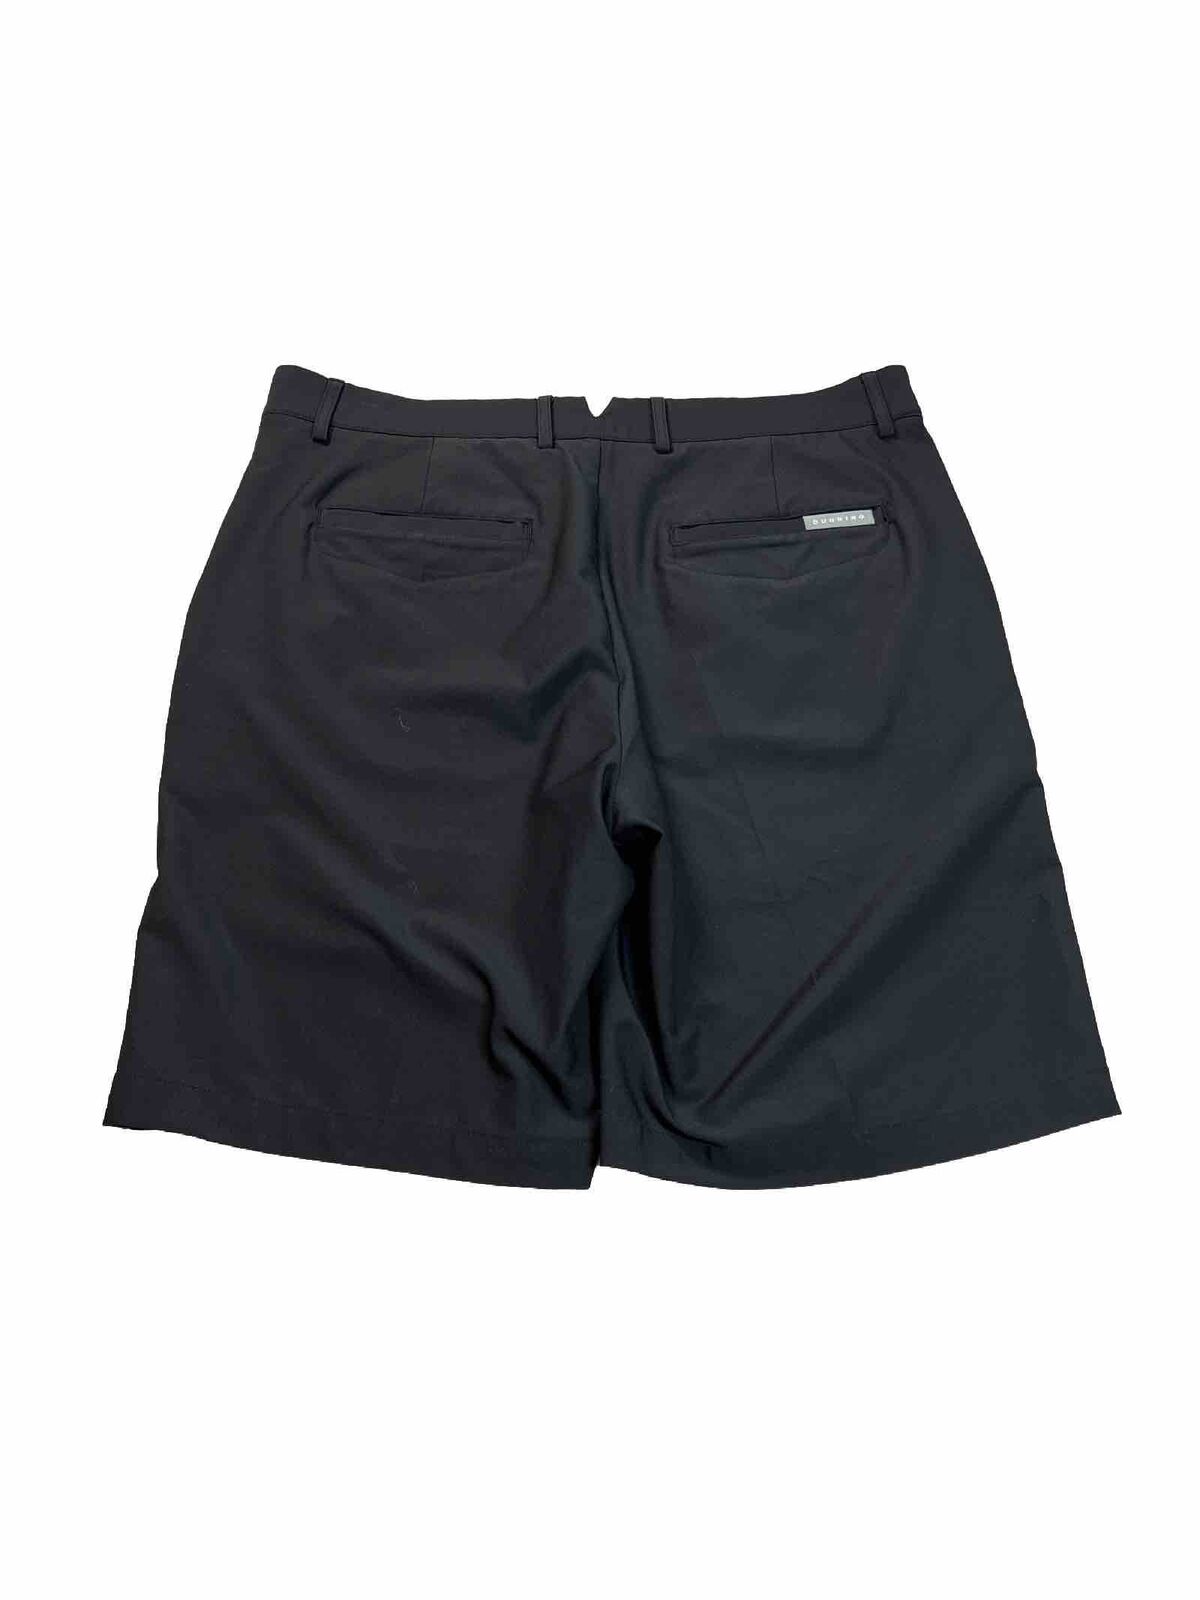 Dunning Men's Black Flat Front Stretch Golf Shorts - 34